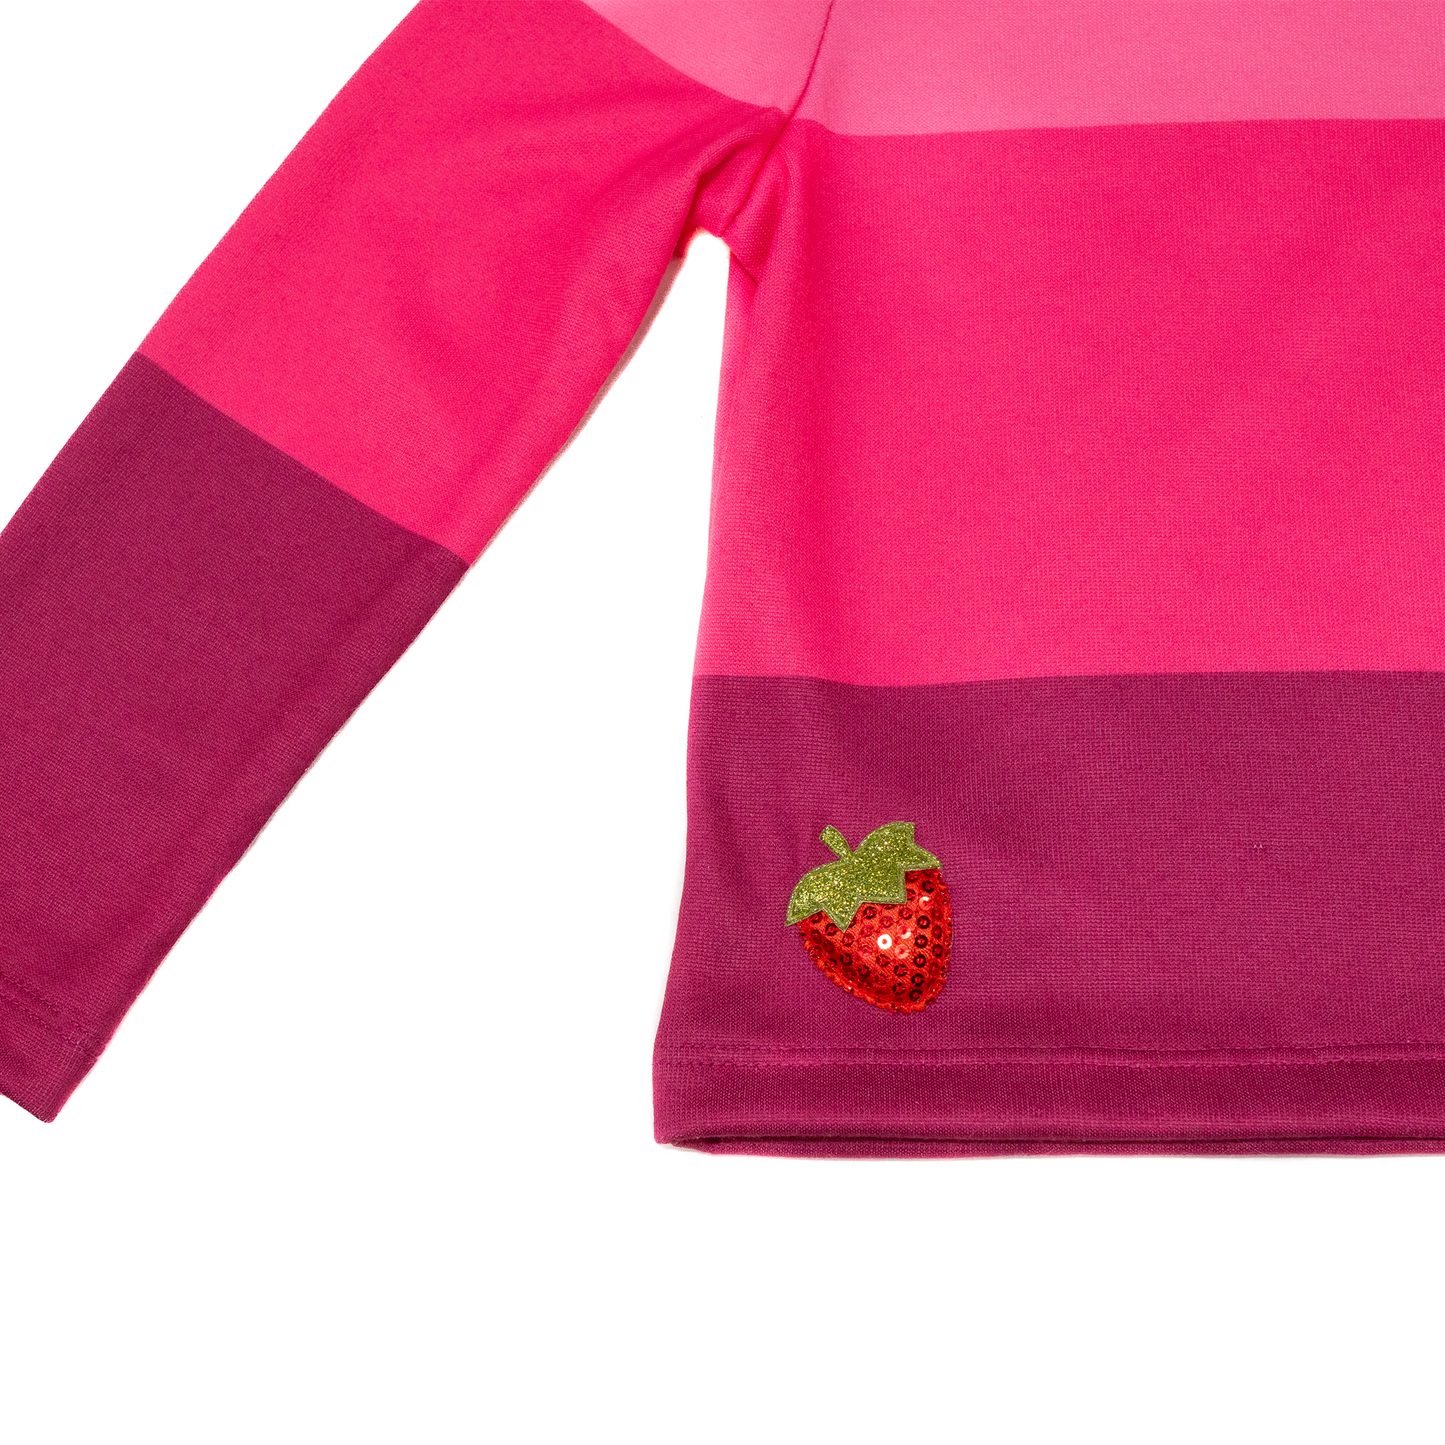 Strawberry Shortcake Berry Knit Top